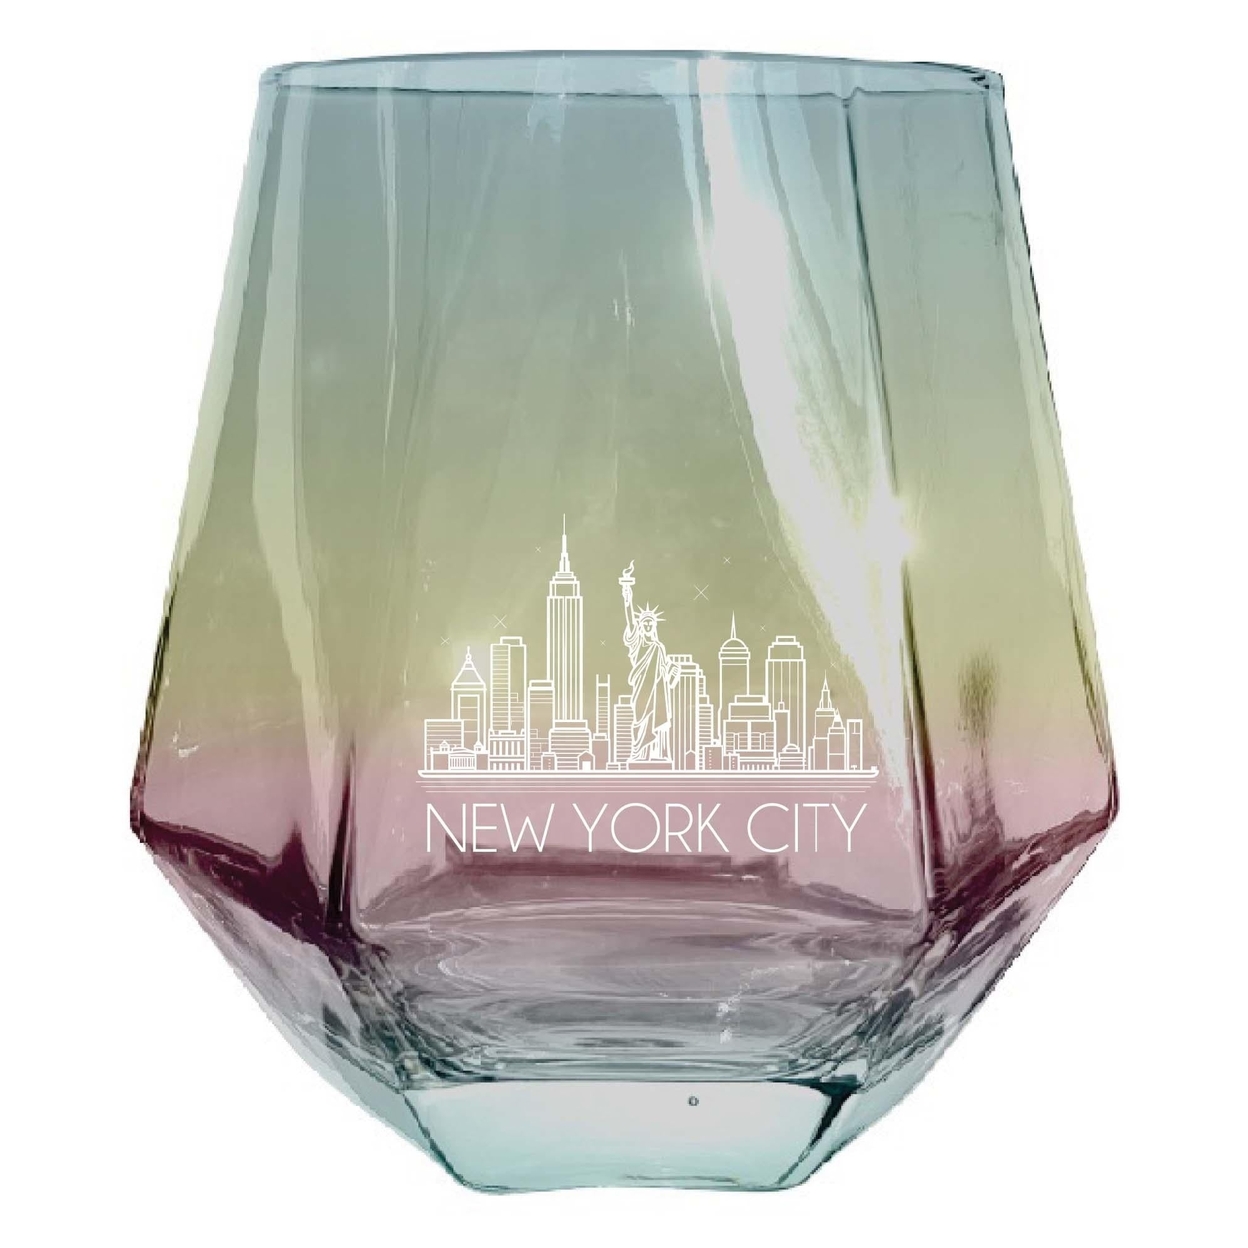 New York City Souvenir Wine Glass EngravedDiamond 15 Oz - Iridescent,,Single Unit